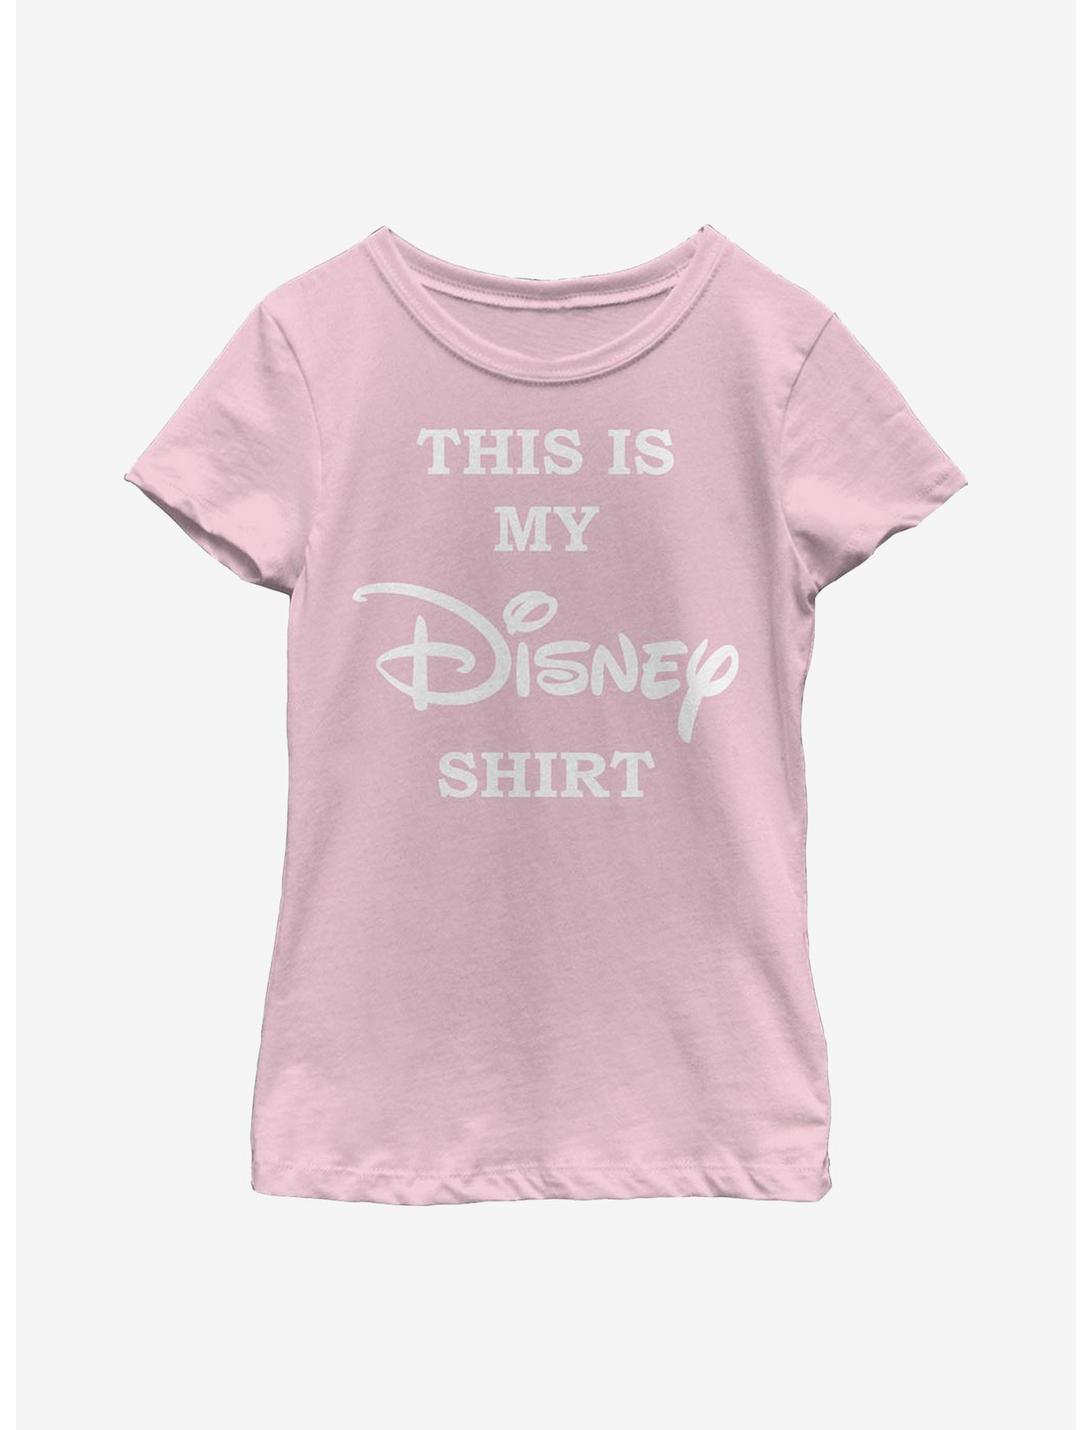 Disney Classic My Disney Shirt Youth Girls T-Shirt, PINK, hi-res